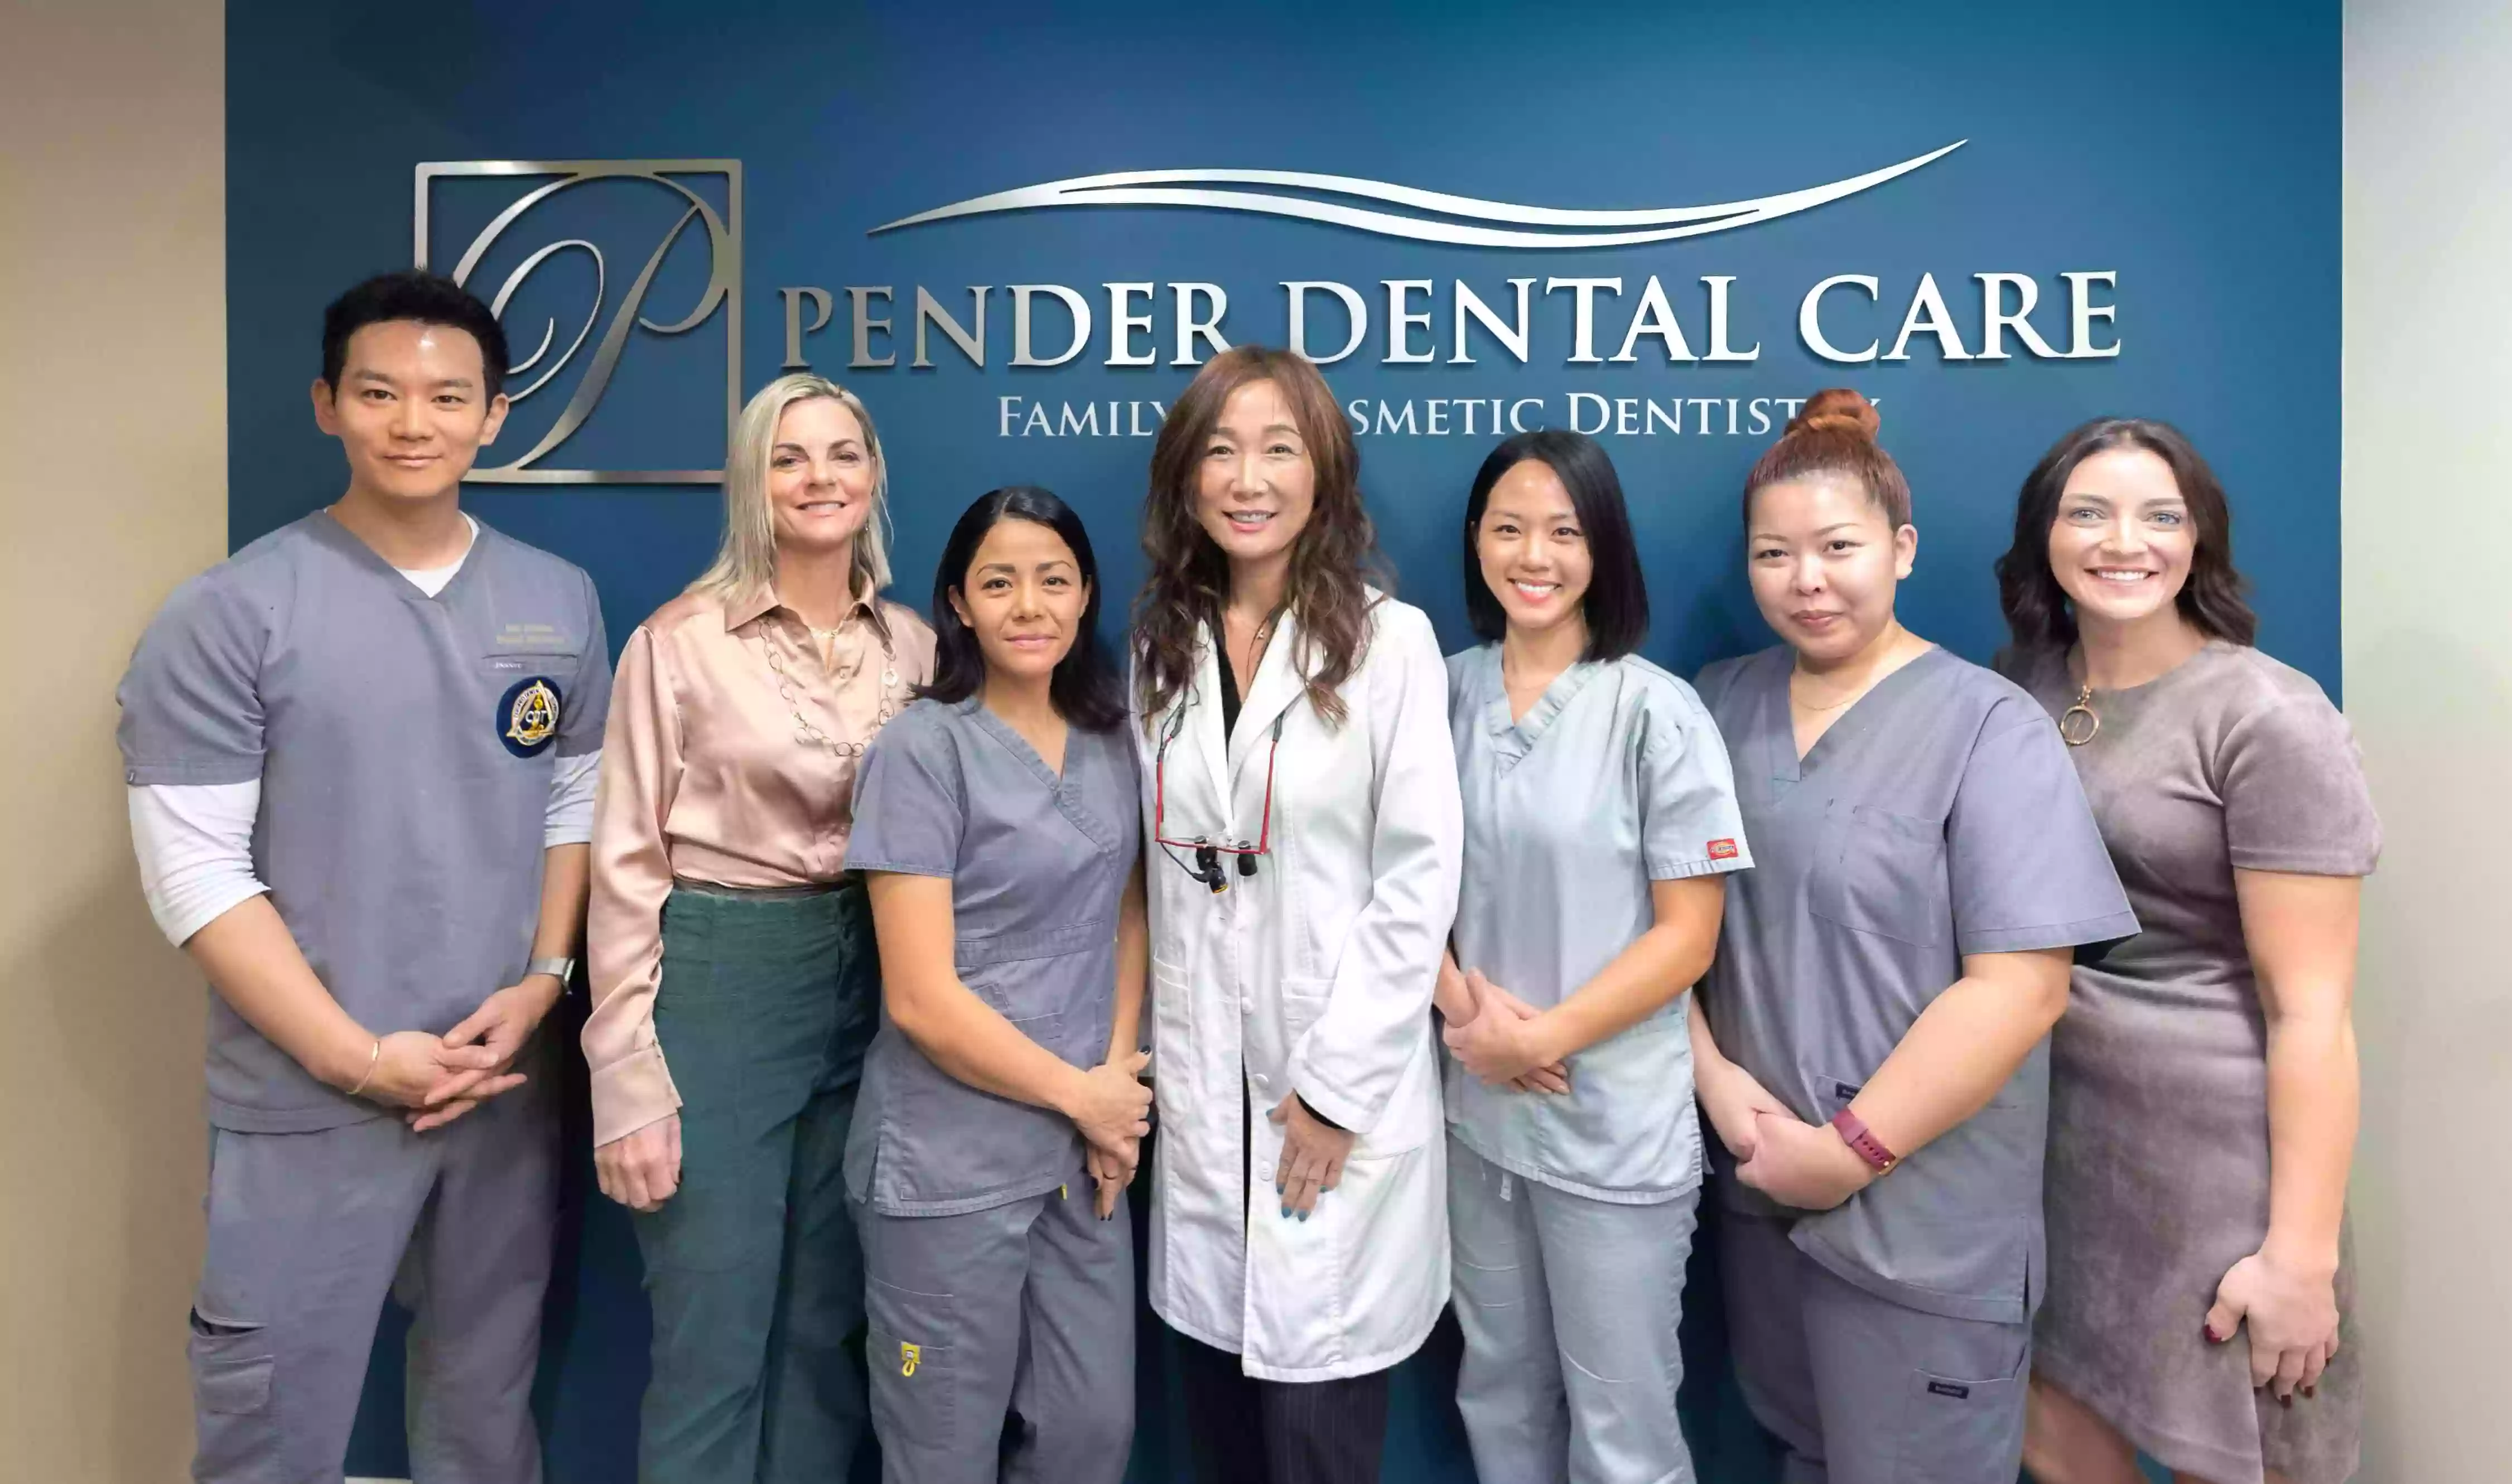 Pender Dental Care